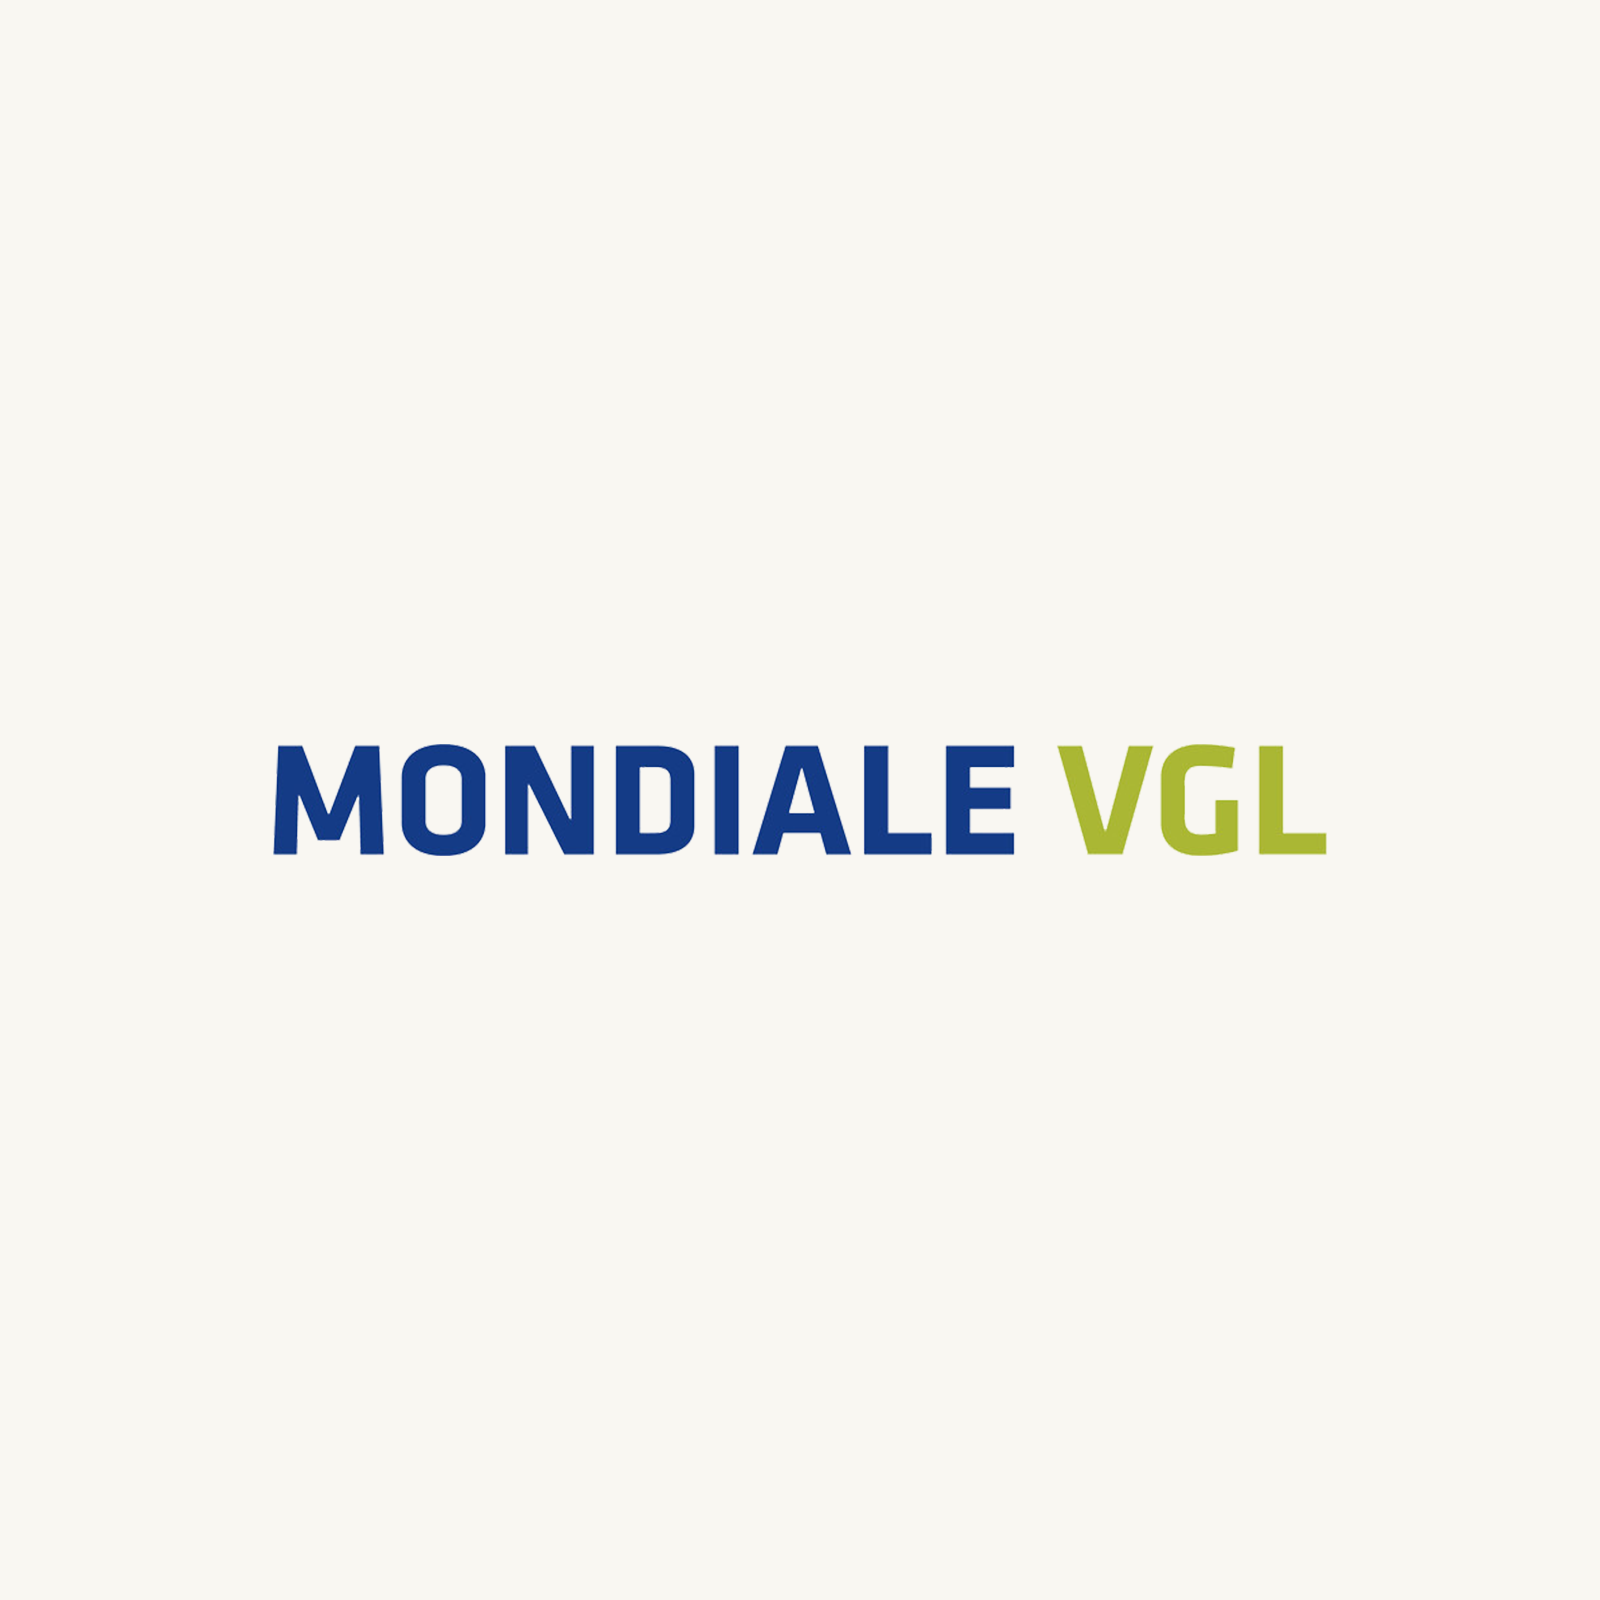 Panduka Ambanpola recently appointed as Group Planning & Analysis Manager at Mondiale VGL